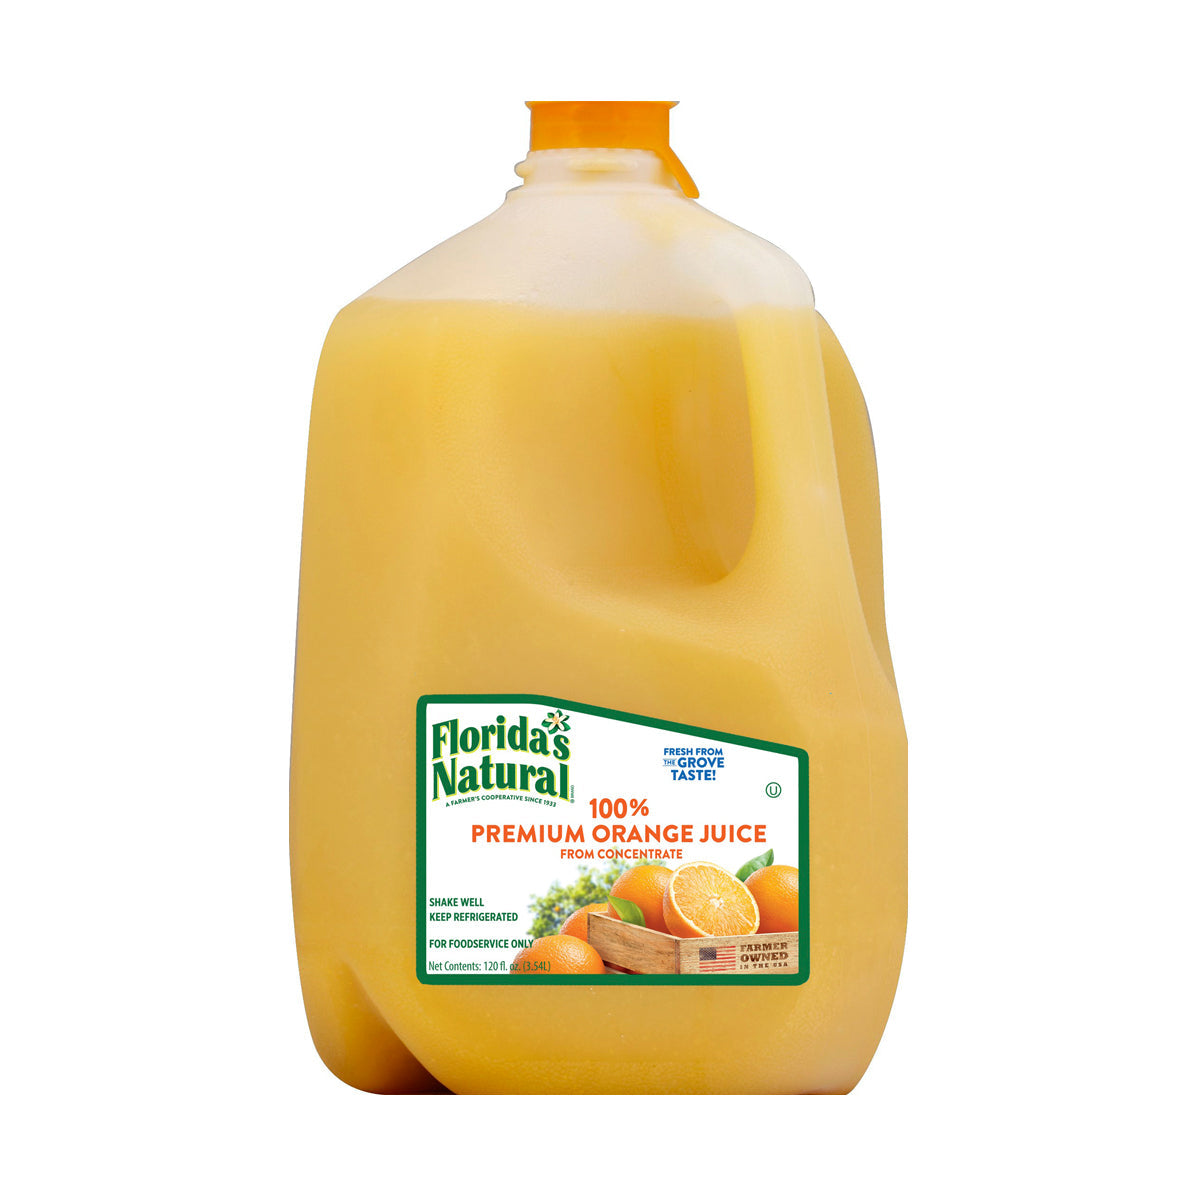 Florida'S Natural Valencia Orange Juice with Pulp 1 GAL